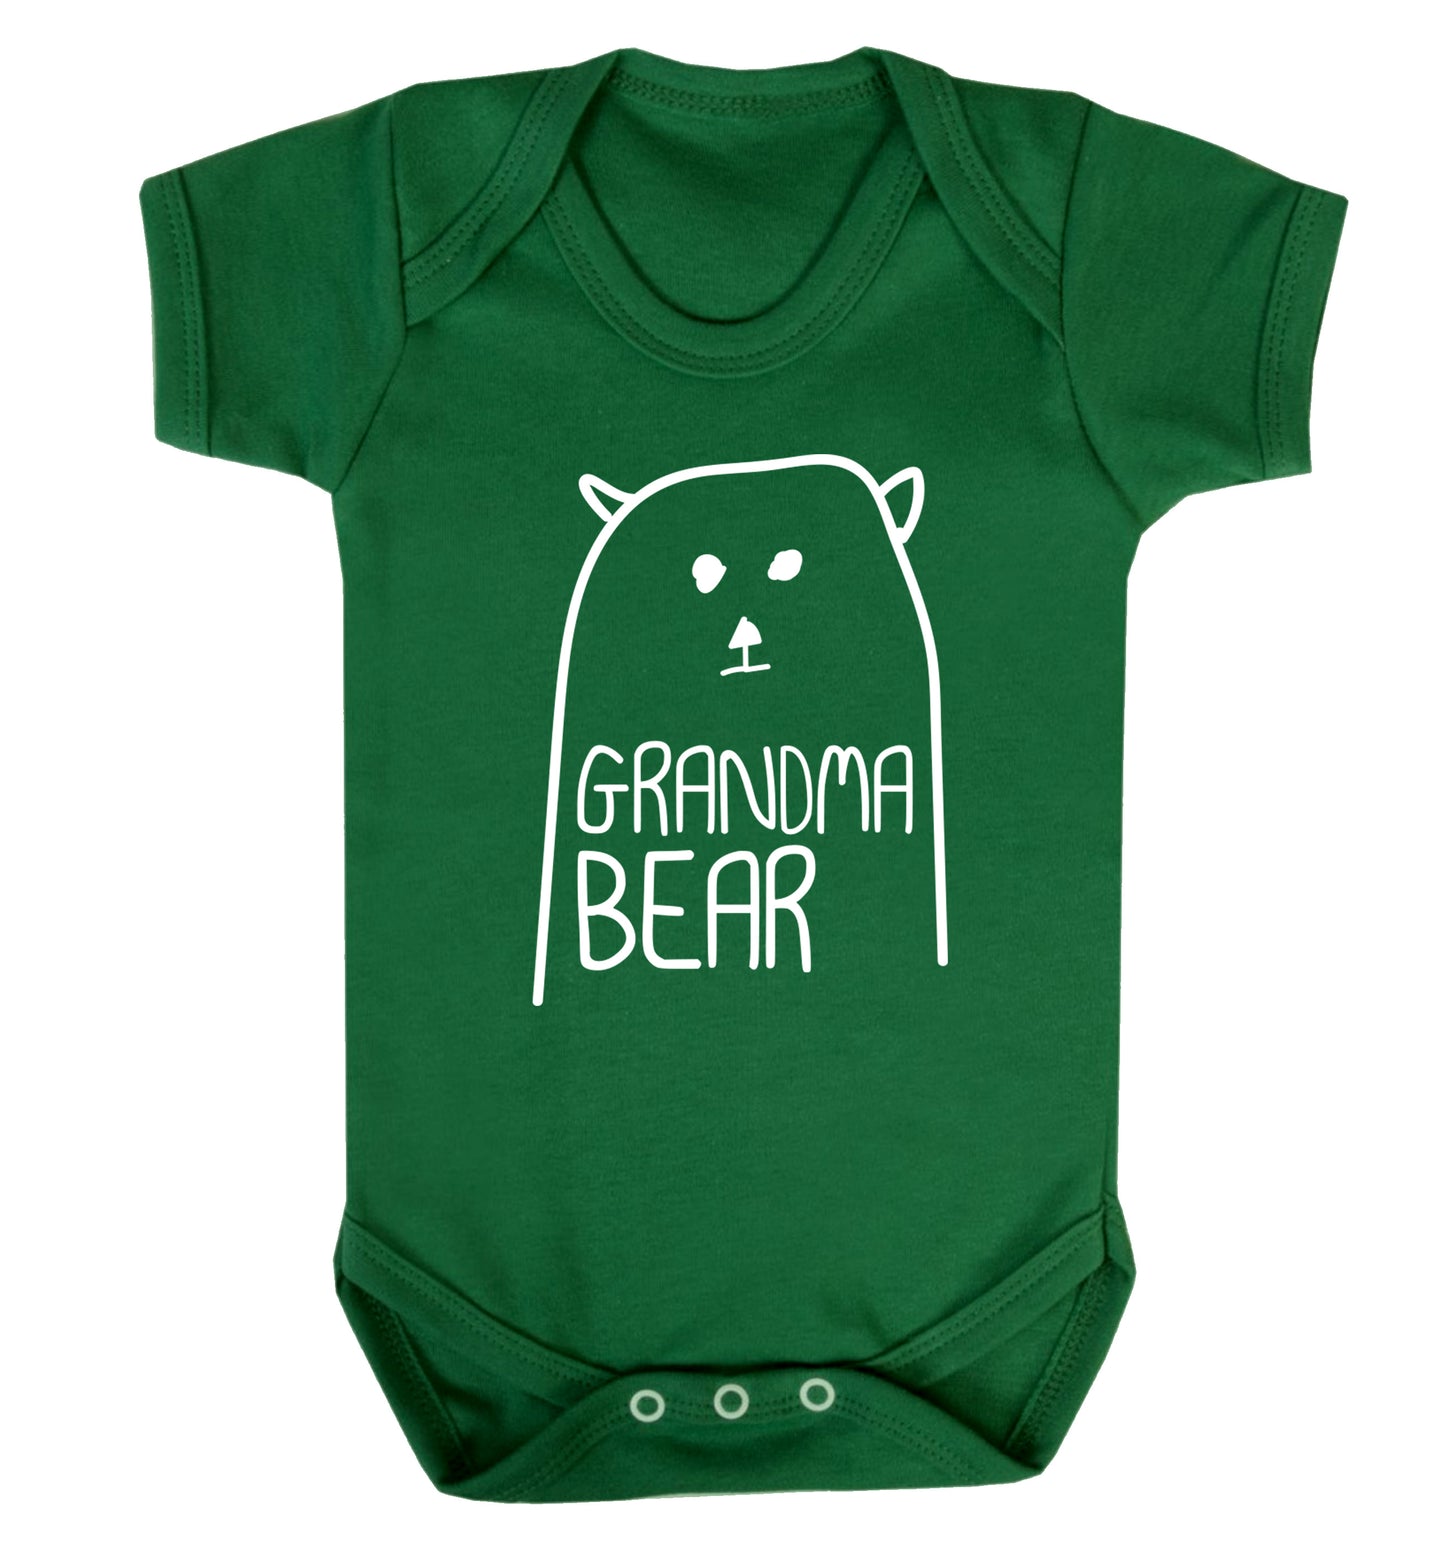 Grandma bear Baby Vest green 18-24 months